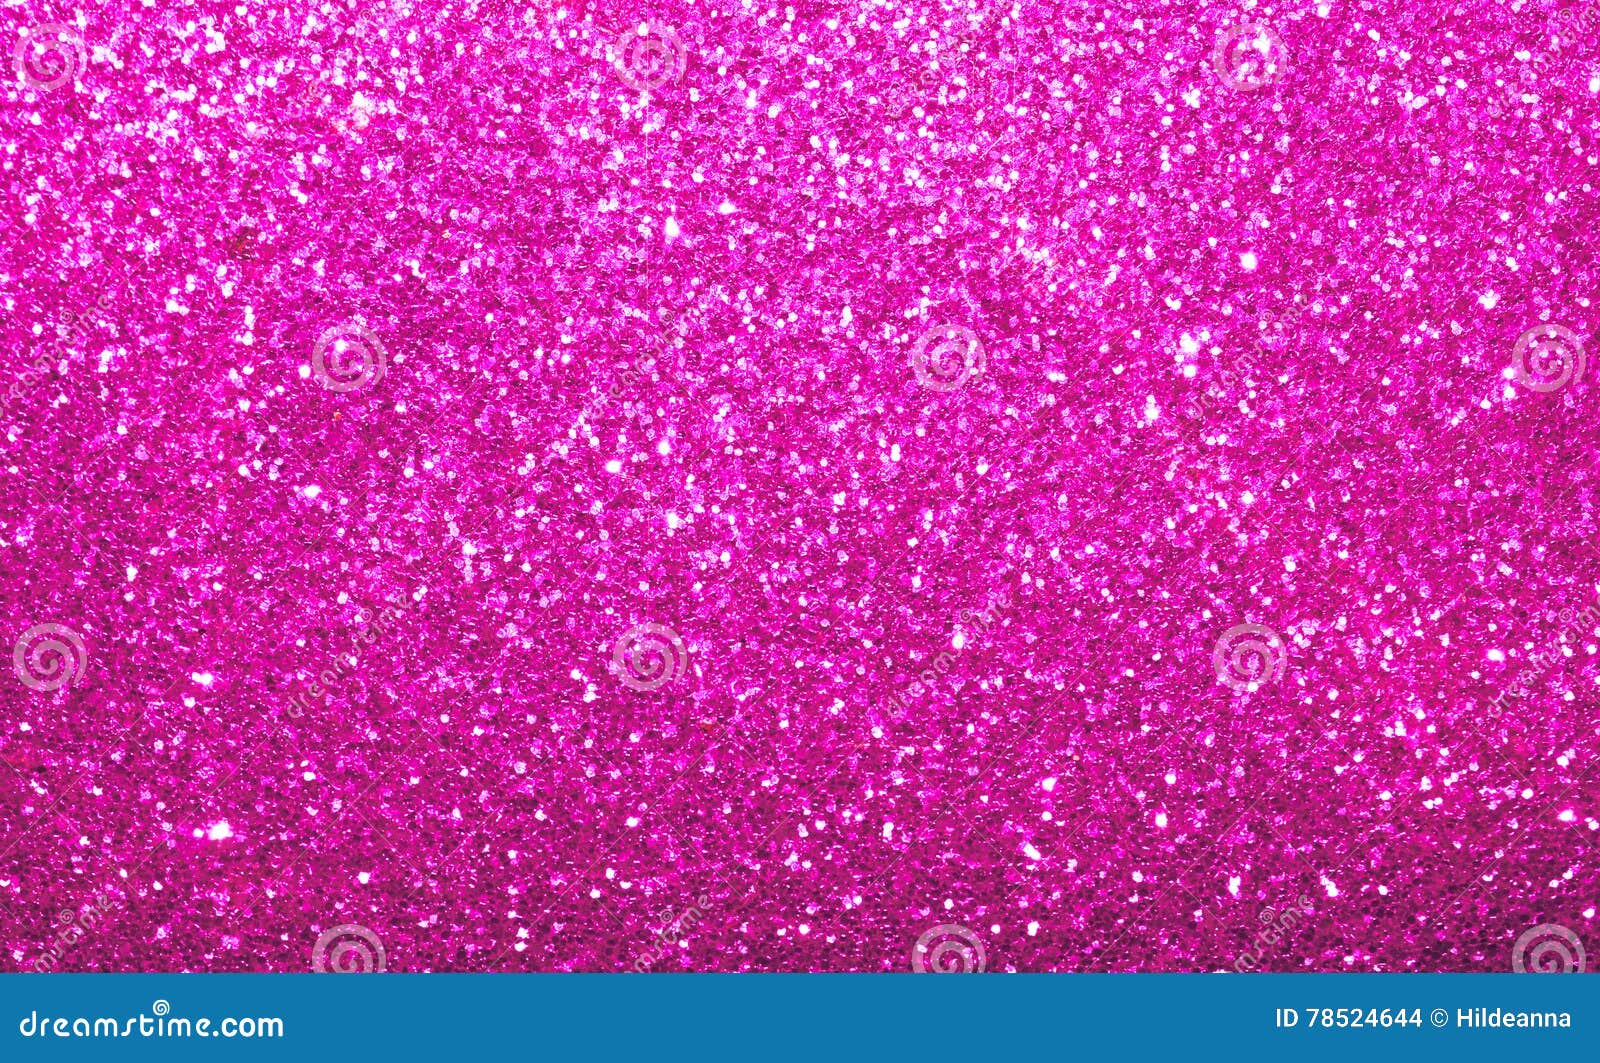 vibrant bright pink glitter background